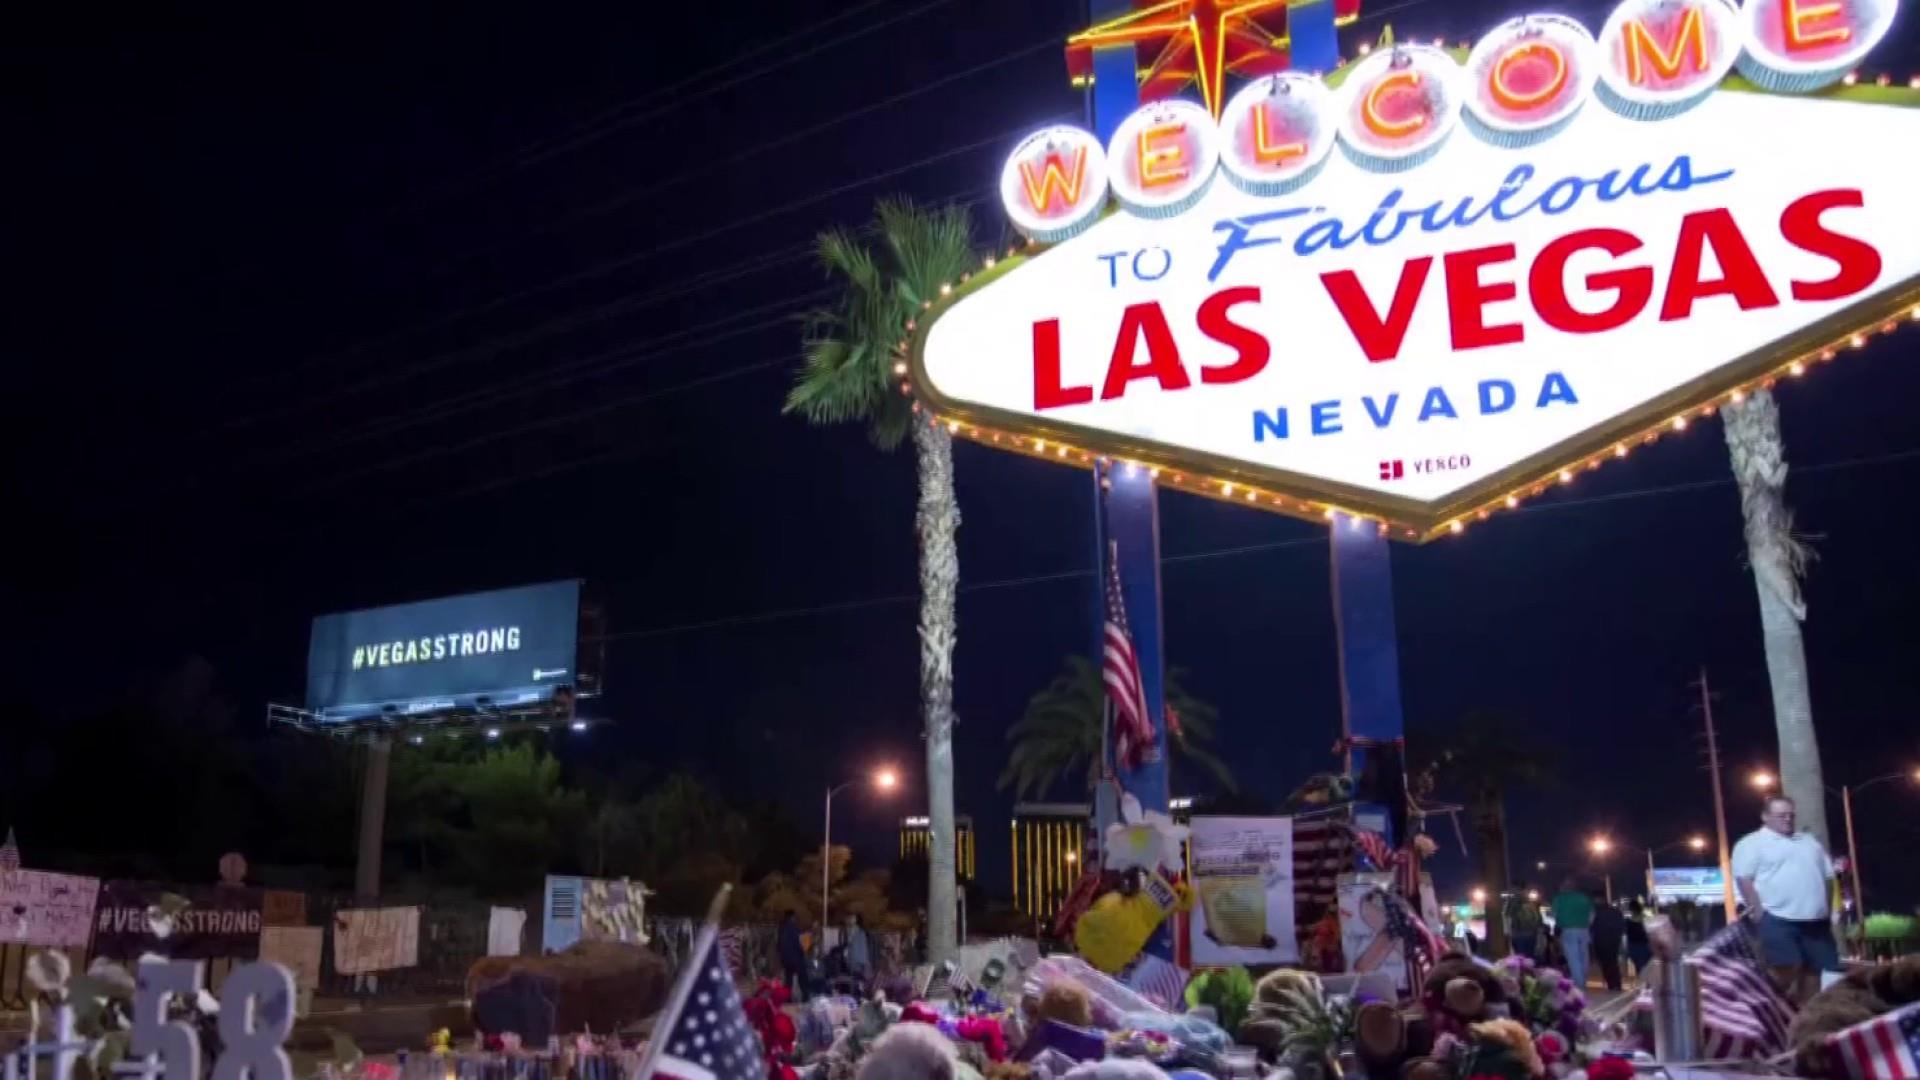 owner sues Las Vegas shooting victims